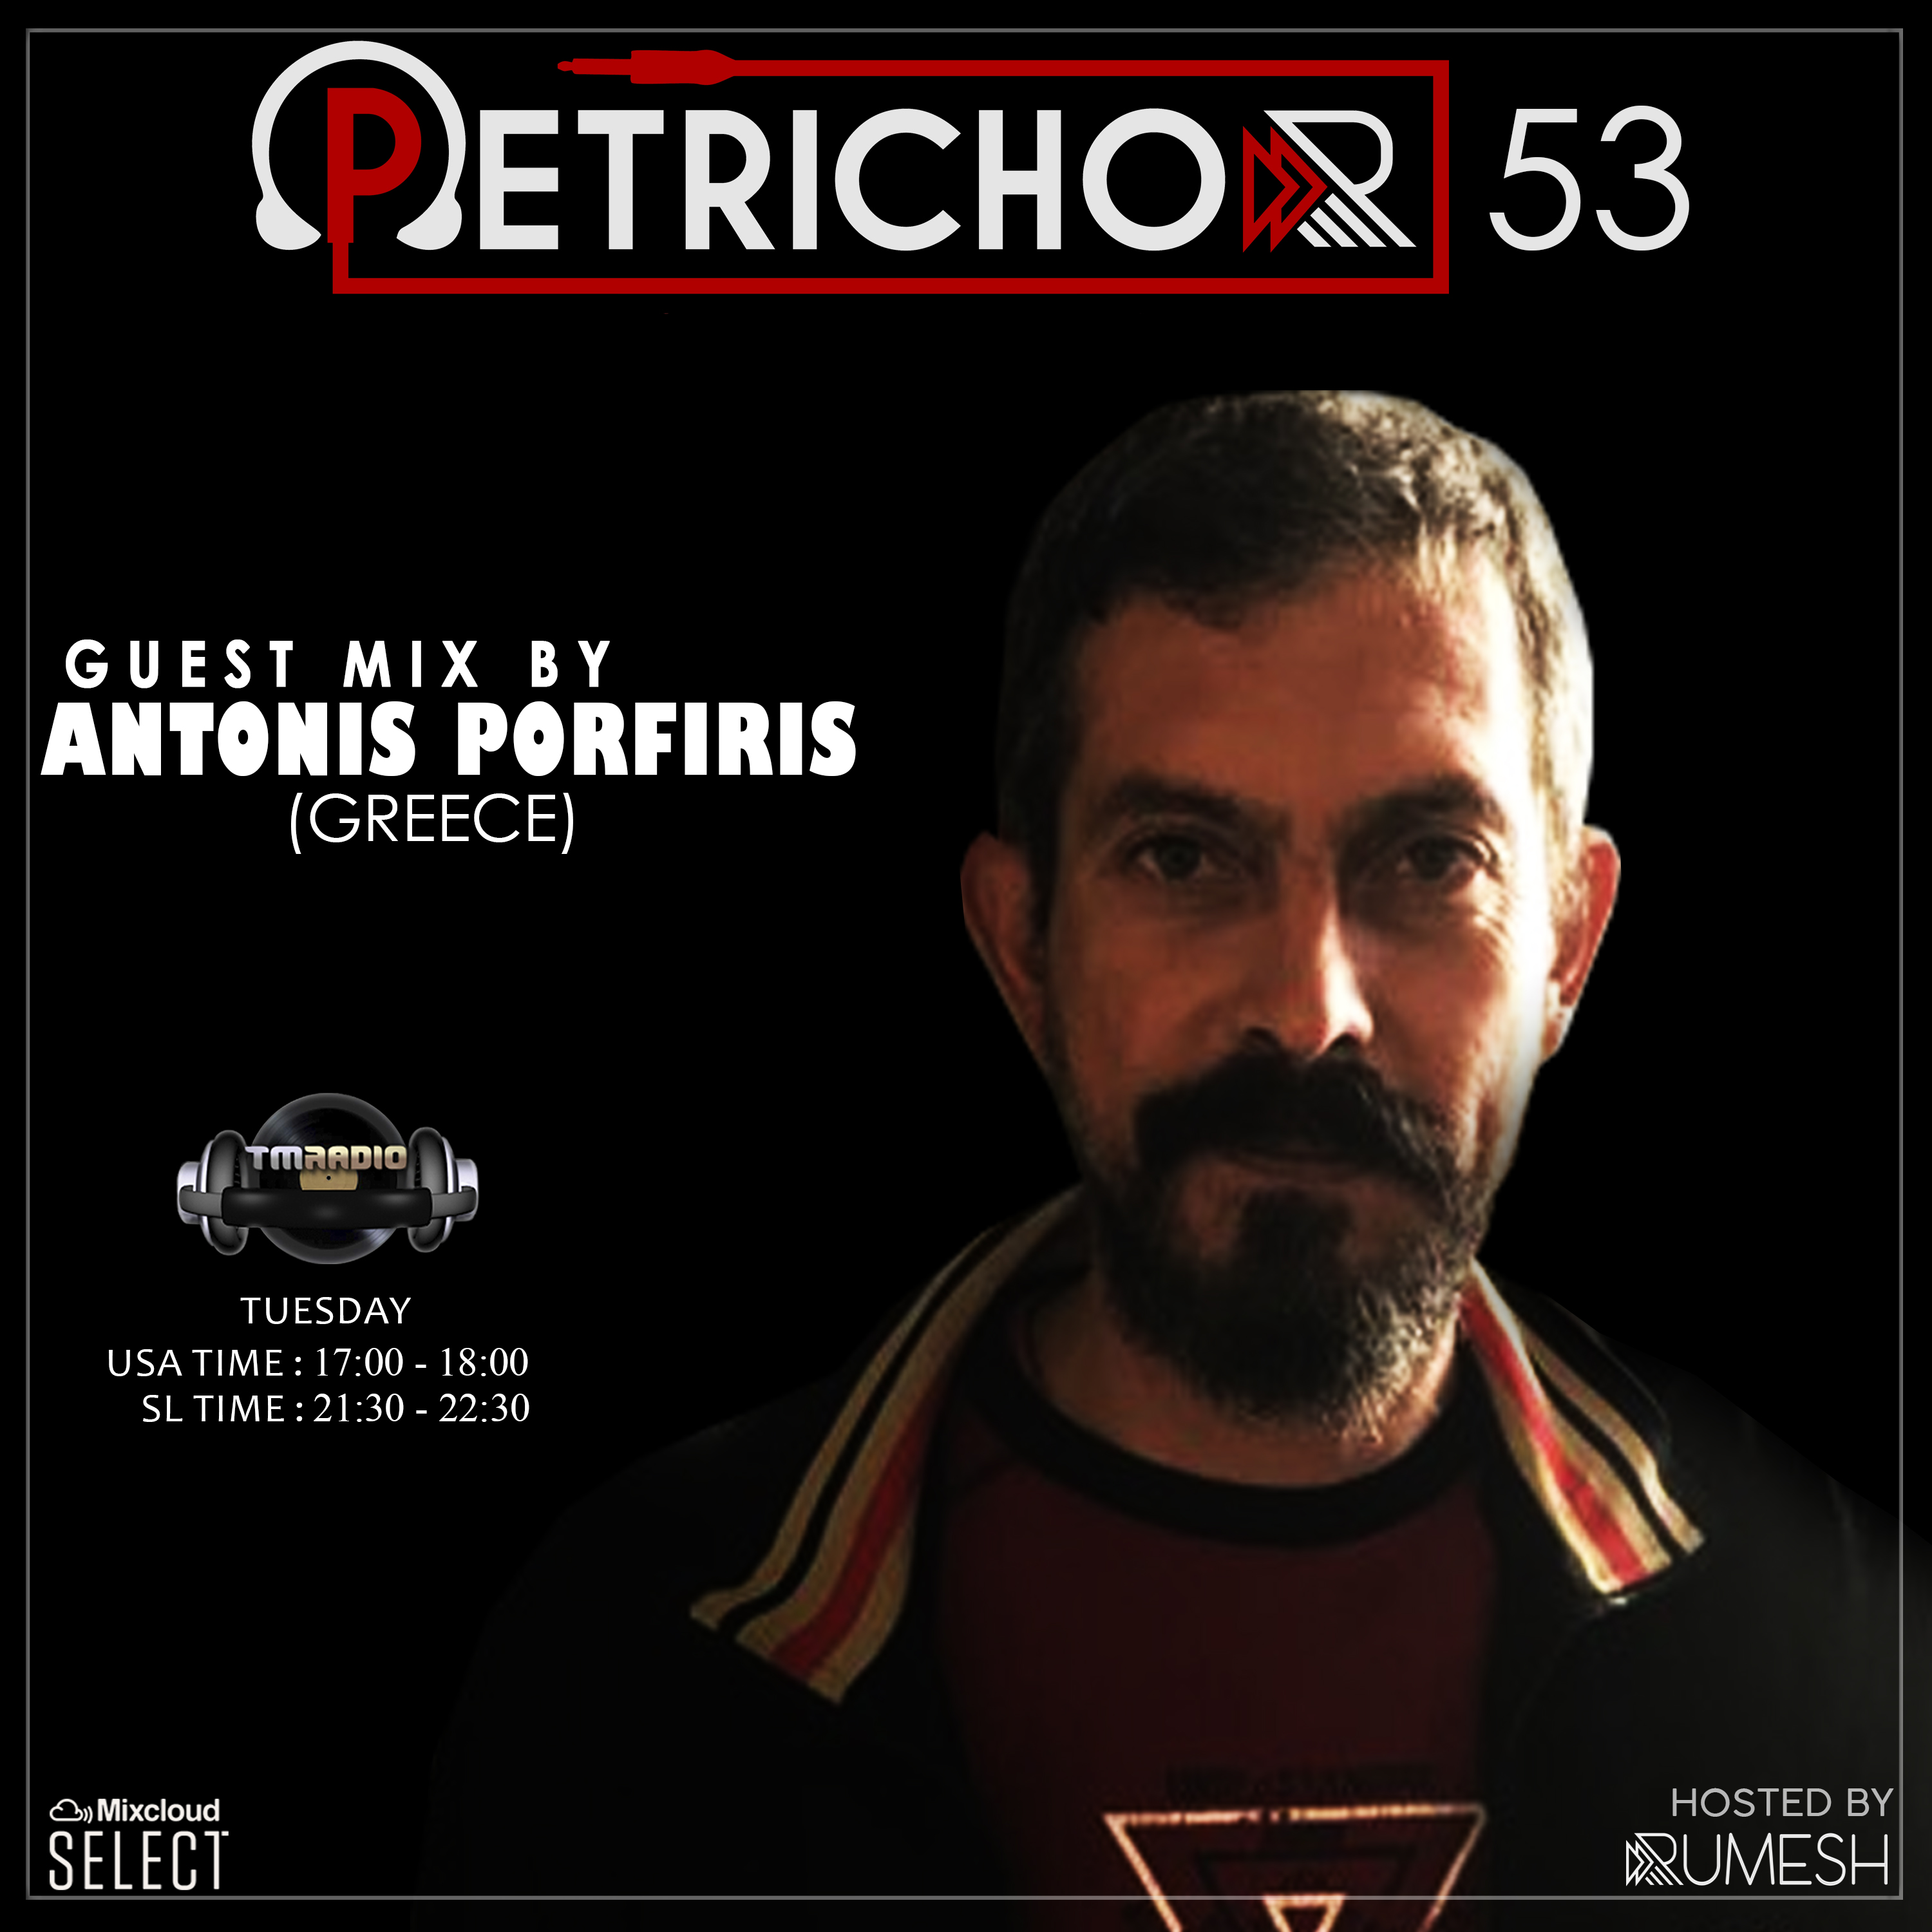 Petrichor :: Petrichor 53 guest mix by Antonis Porfiris (Greece) (aired on November 12th, 2019) banner logo